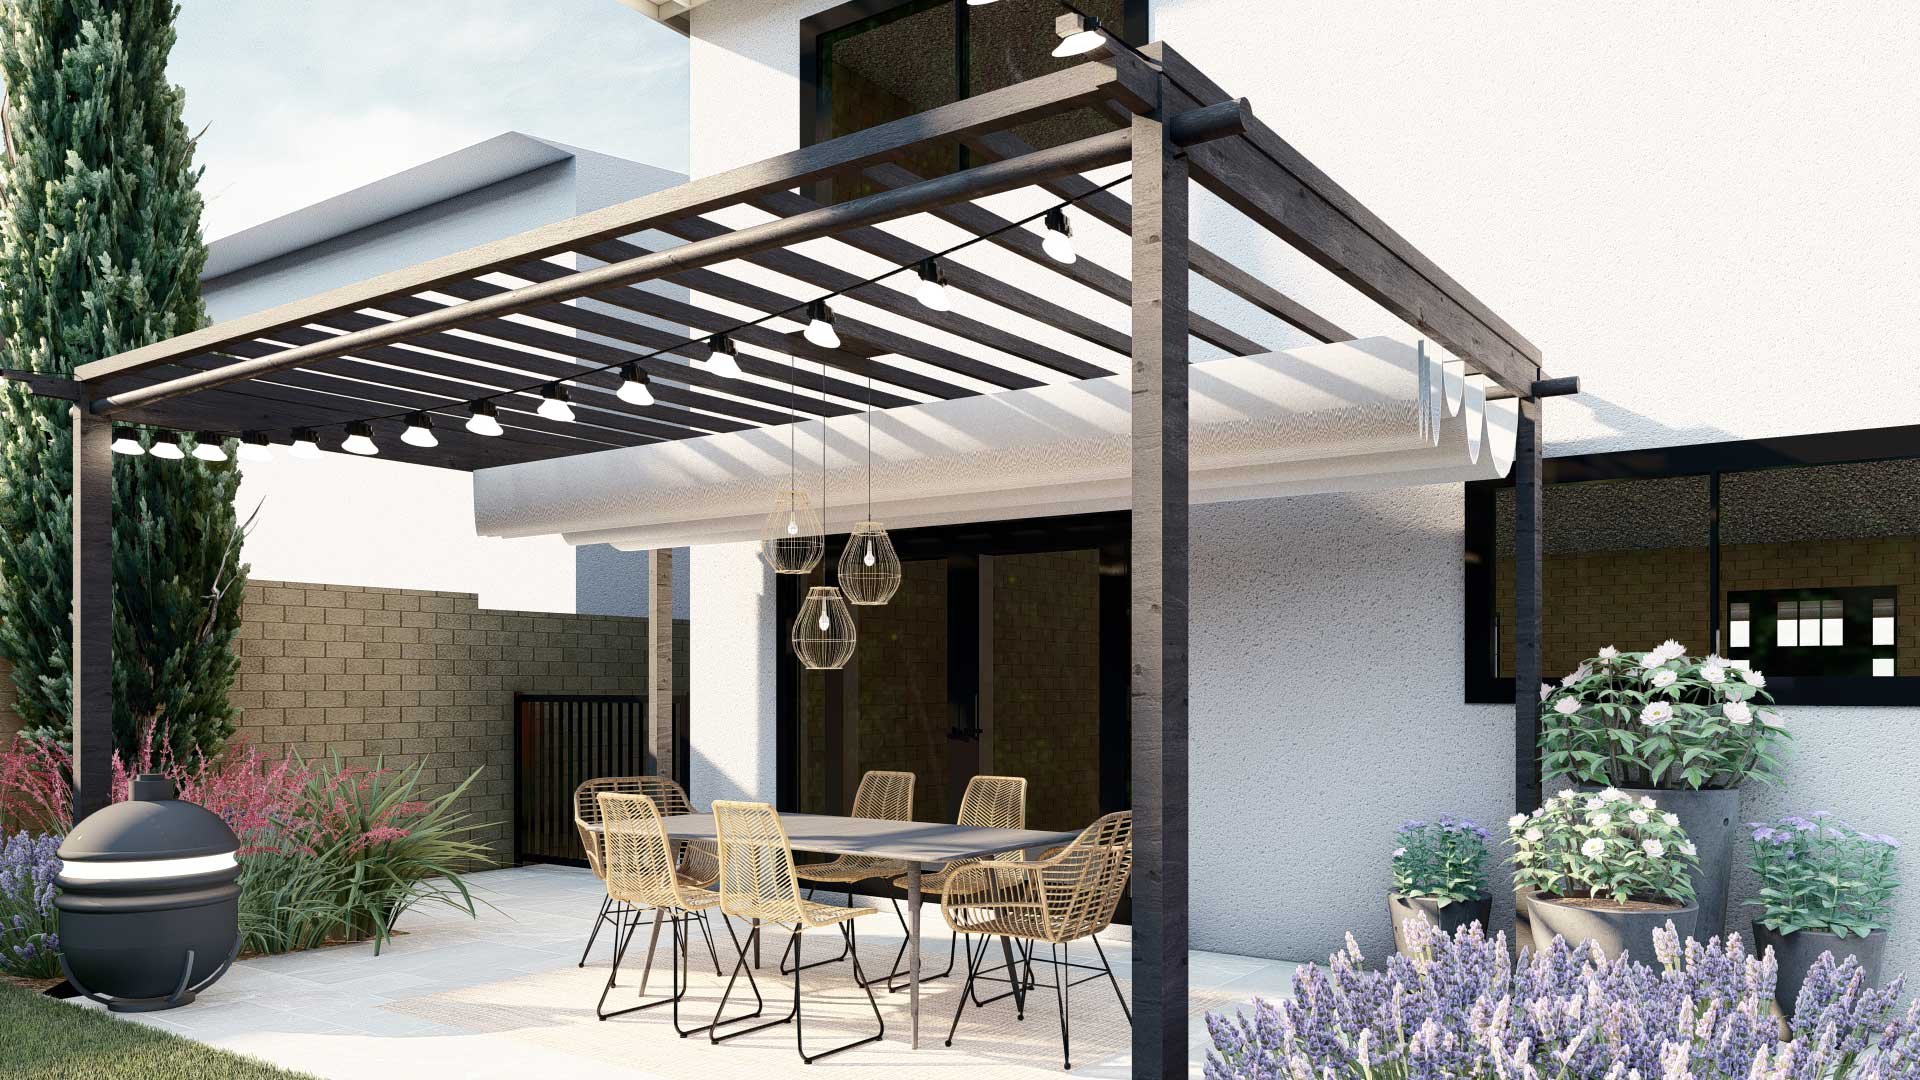 Backyard patio with modern black pergola over dining area